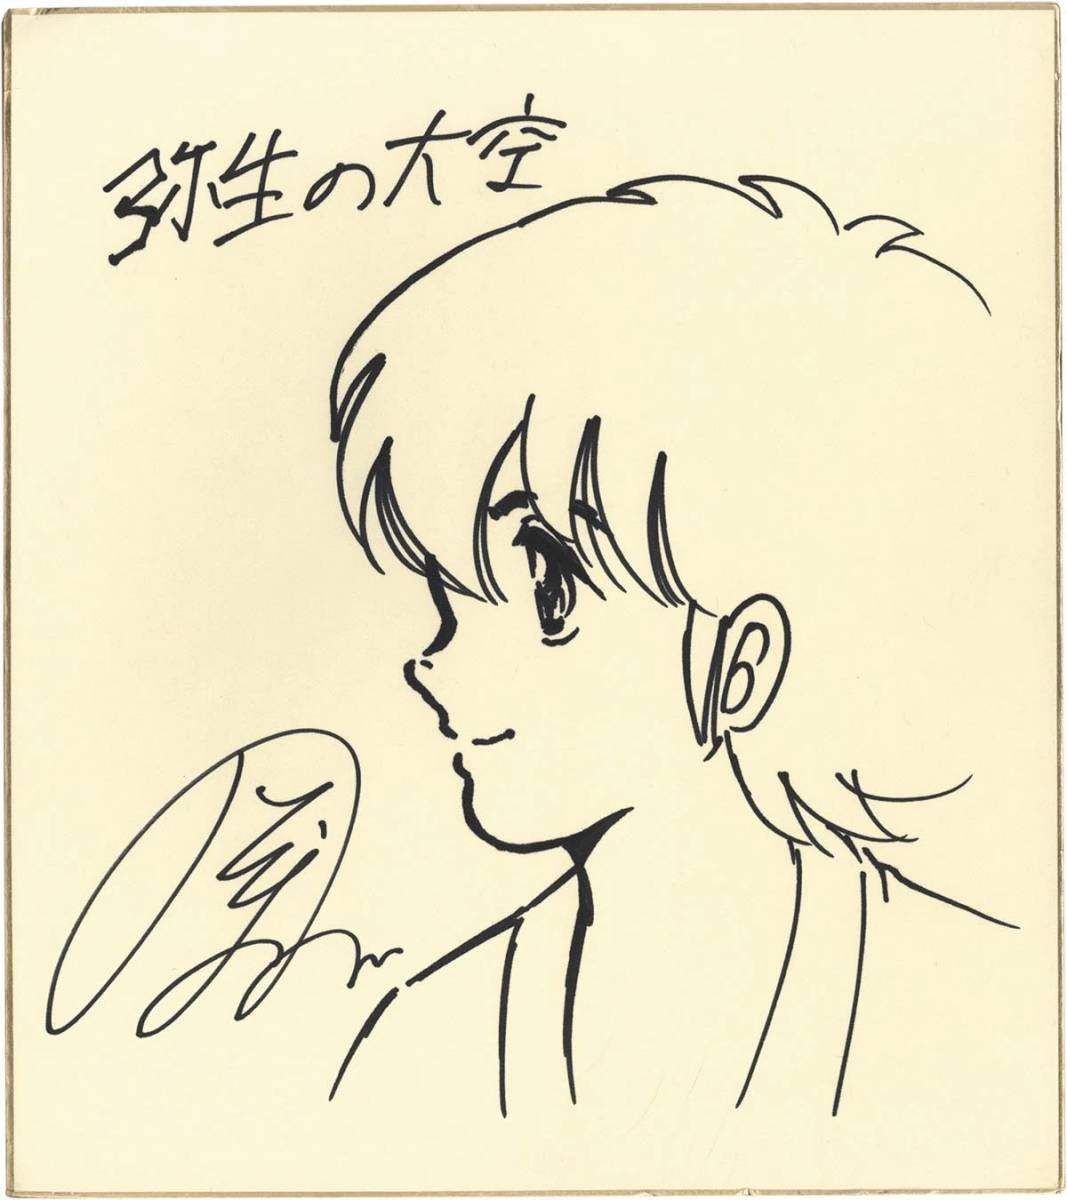 Toshio Nobe 手绘插图, 签名彩色纸 一条周作的《弥生的天空》# 复制原画, 卡通素描, 插图, 设置材料, 古董, 漫画, 动漫周边, 符号, 签名